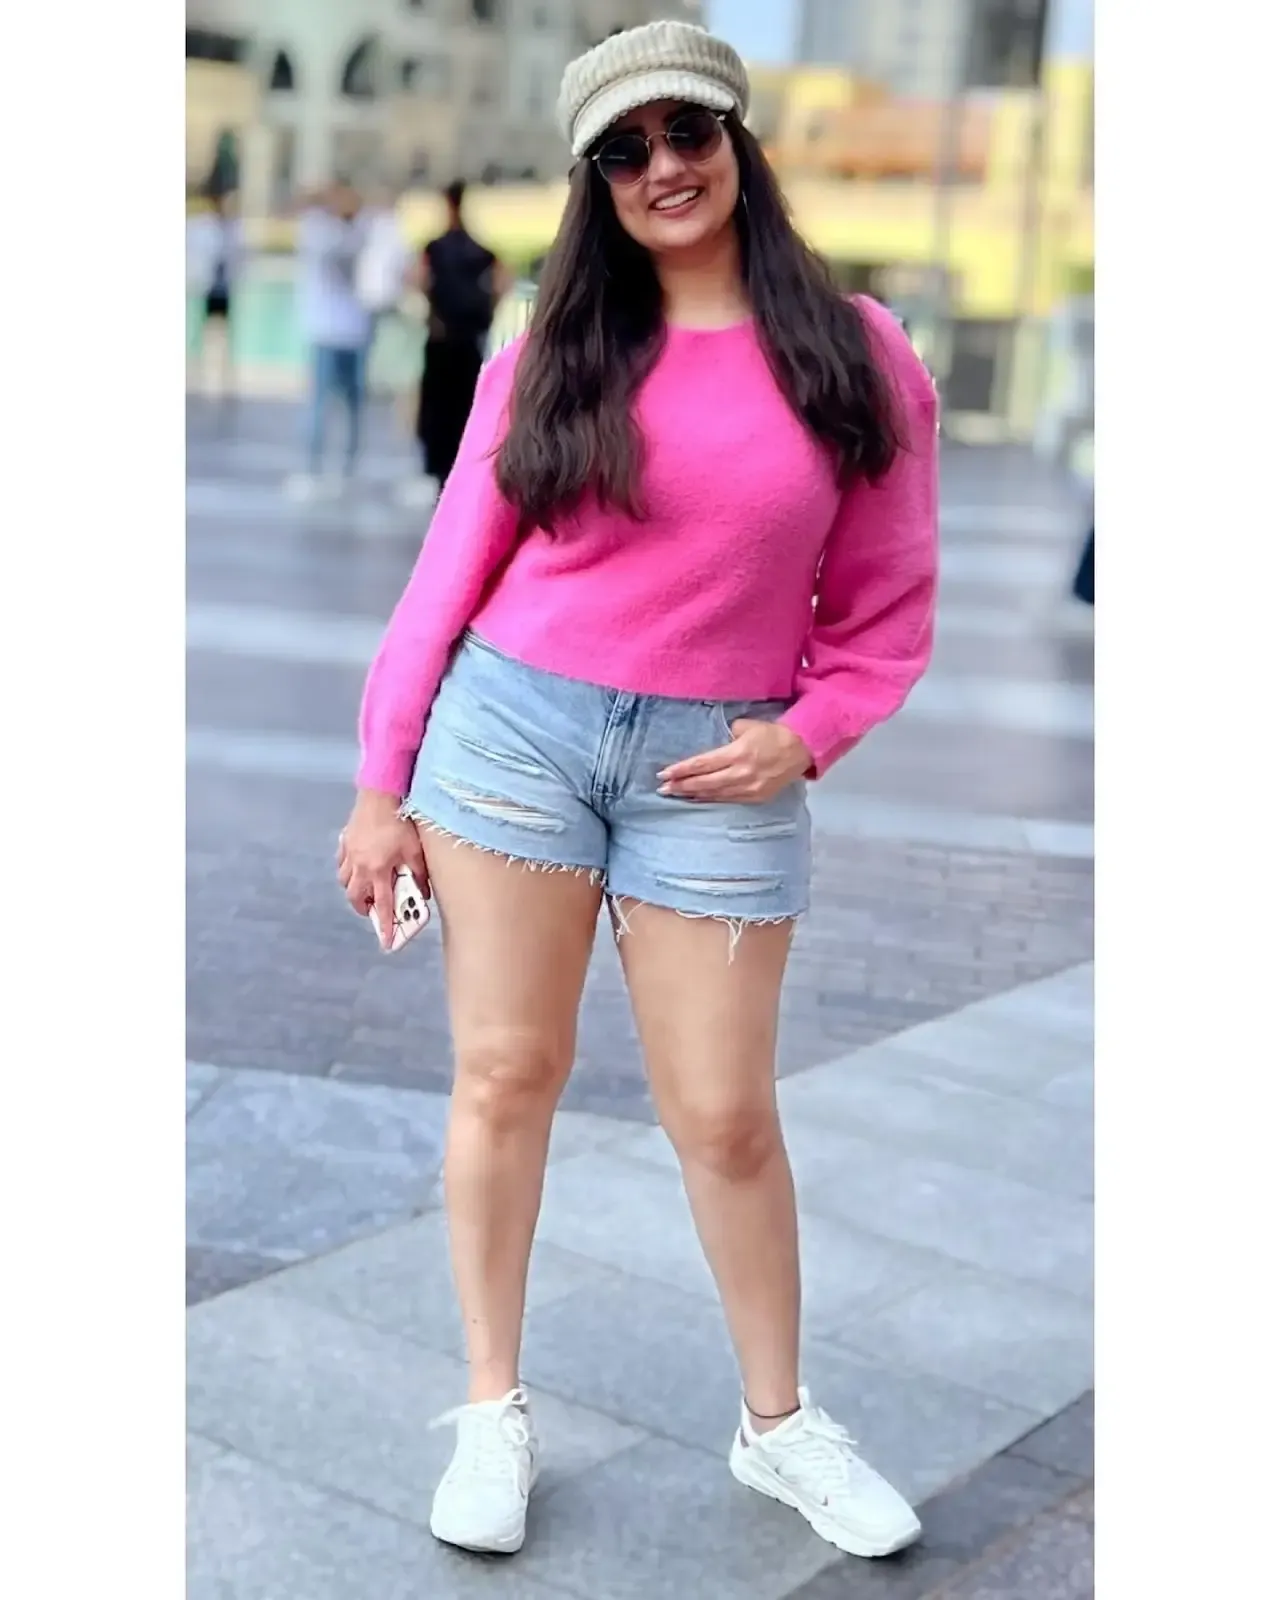 Indian TV Anchor Manjusha Rampalli Long Legs Show in Pink Top